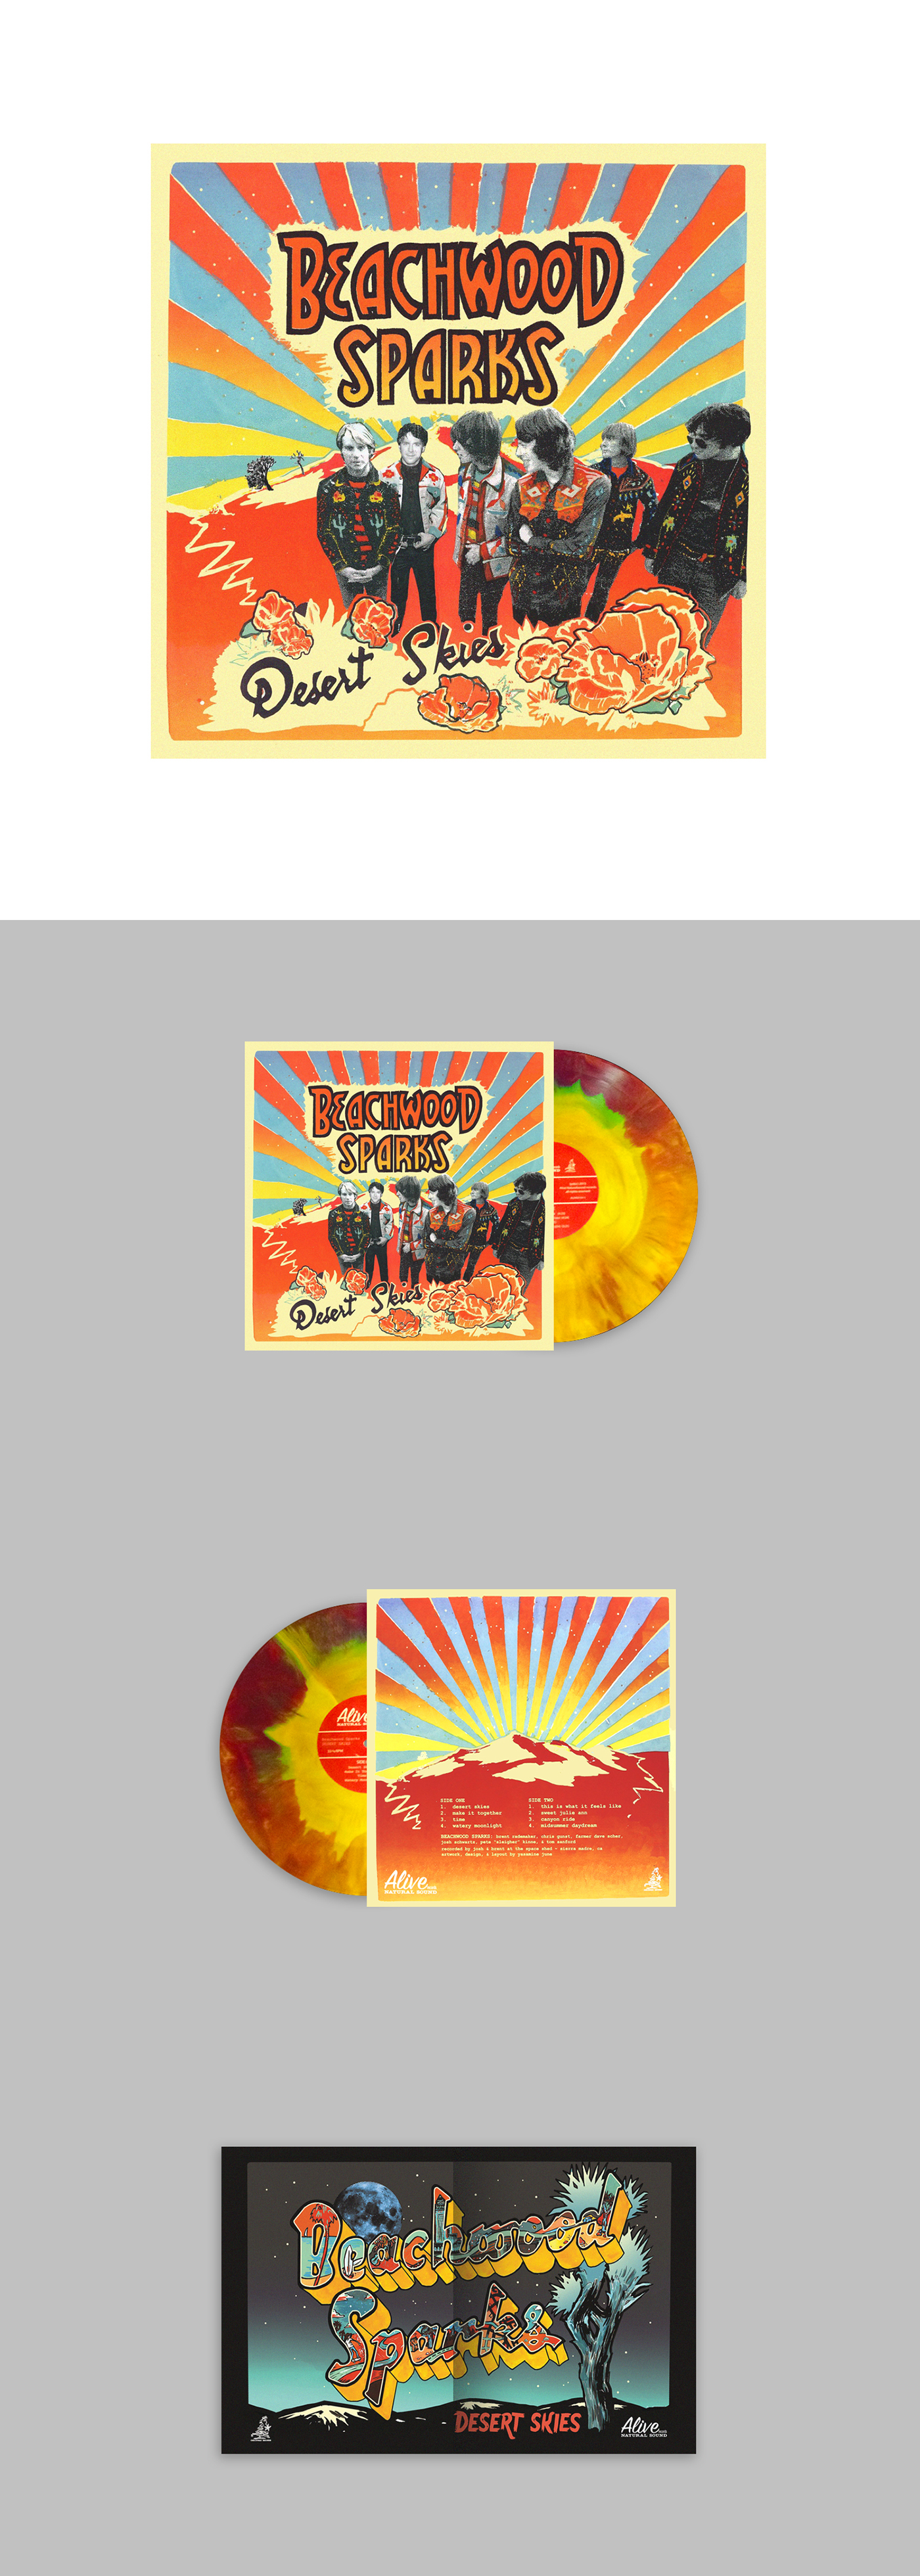 Beachwood Sparks Alive Naturalsound Records Los Angeles rock n roll desert skies LP album art screen print